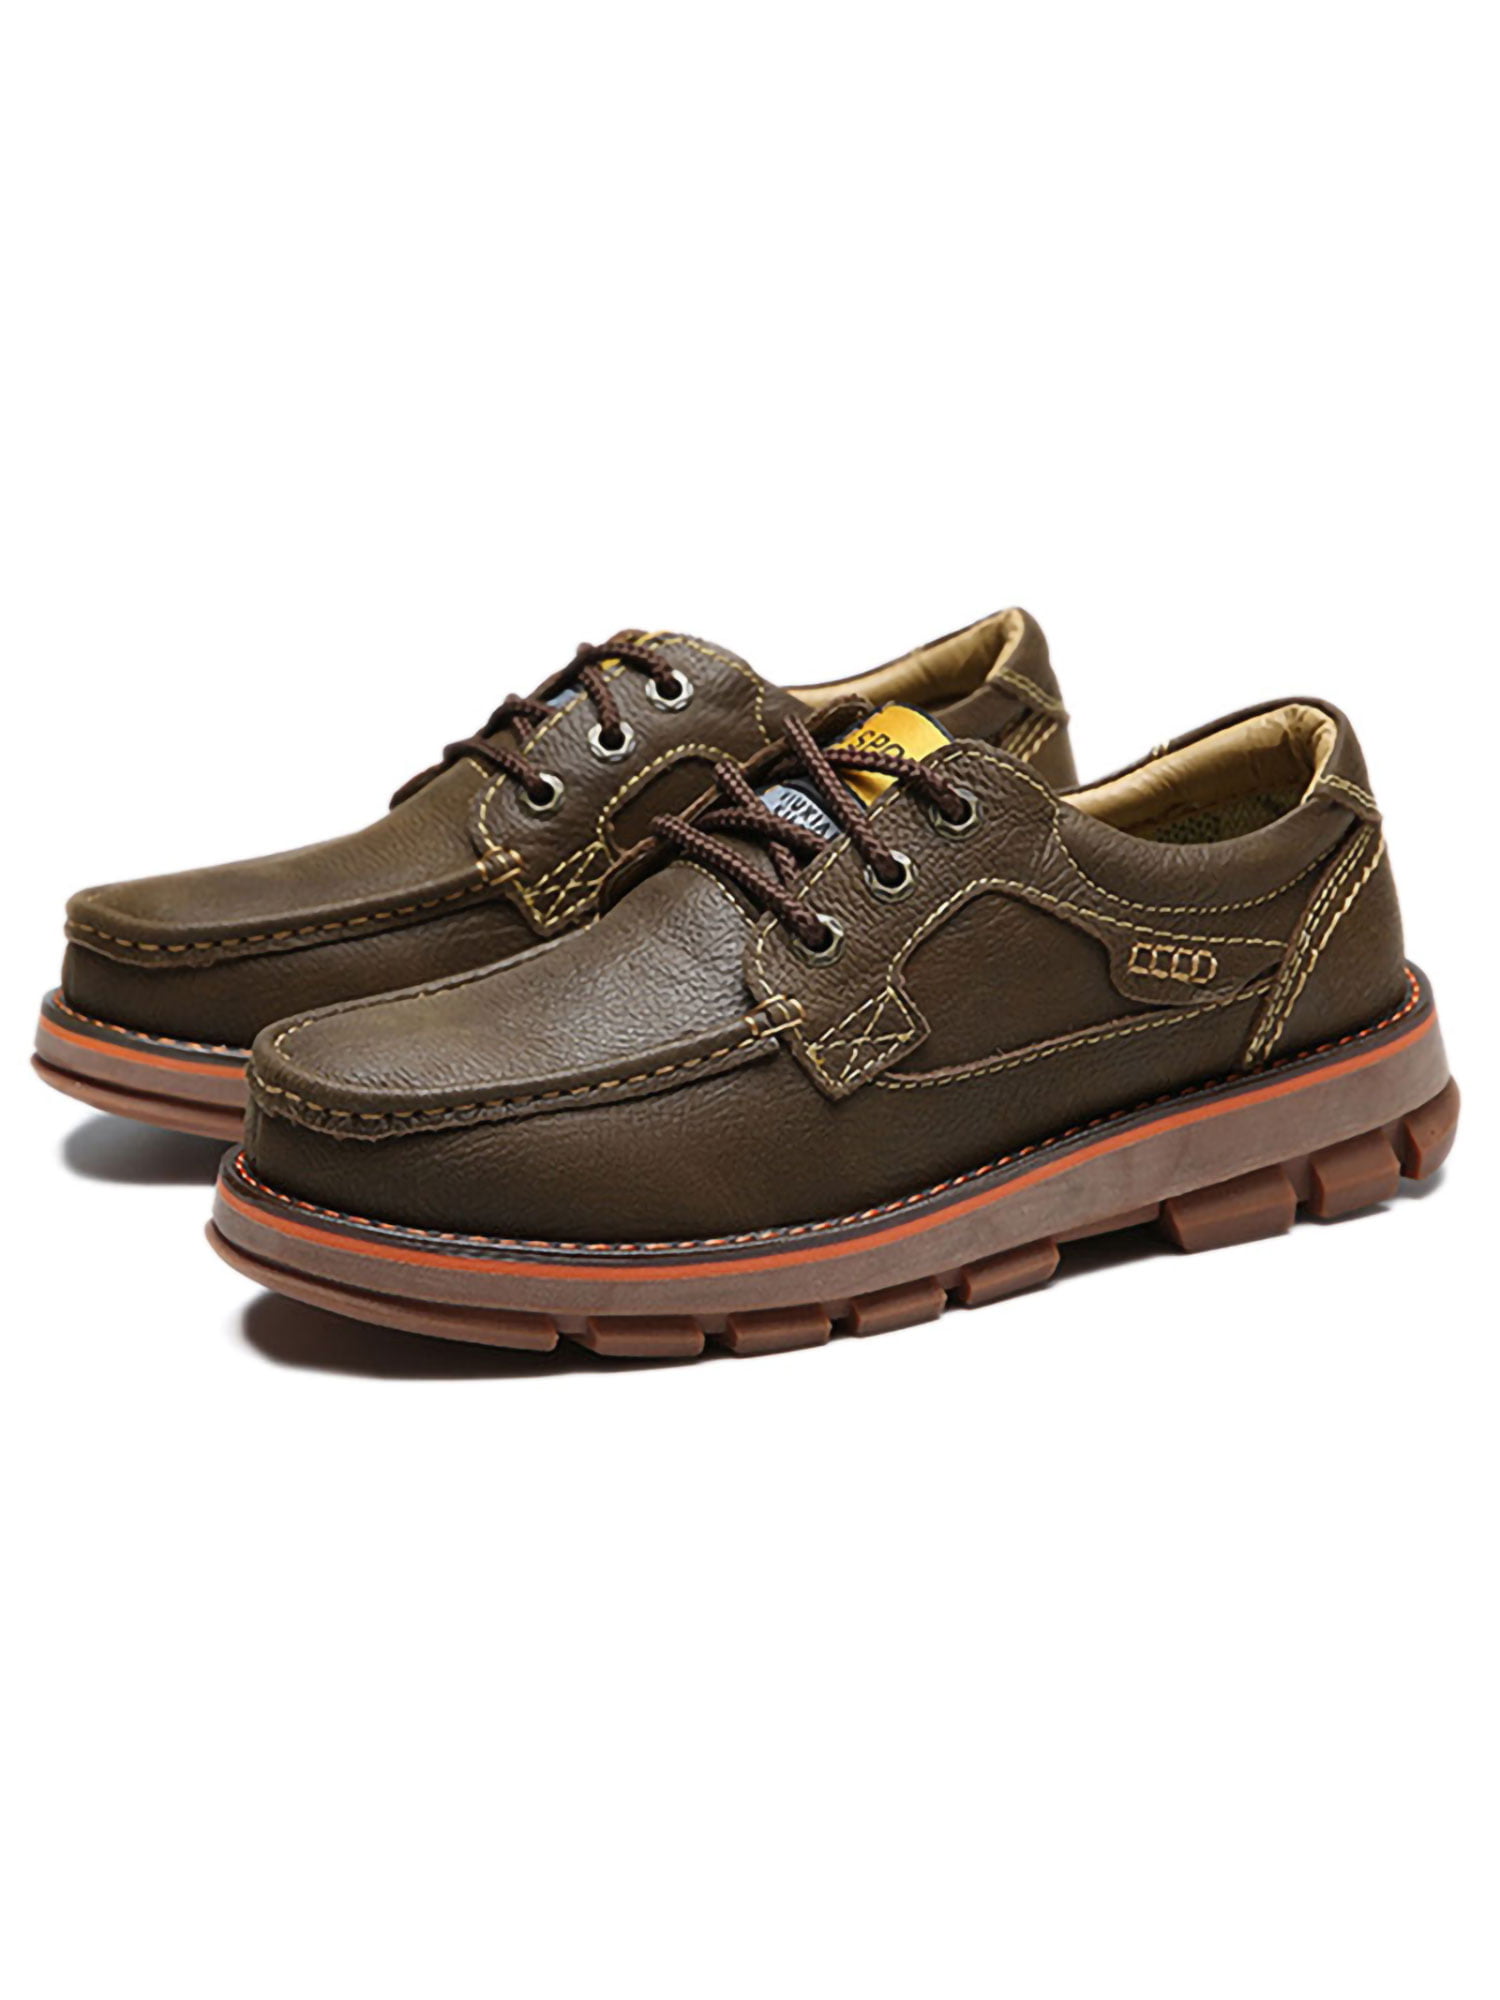 Men Brown dress shoes Men shoes Details about   Handmade Men brown Leather Shoes moccasins